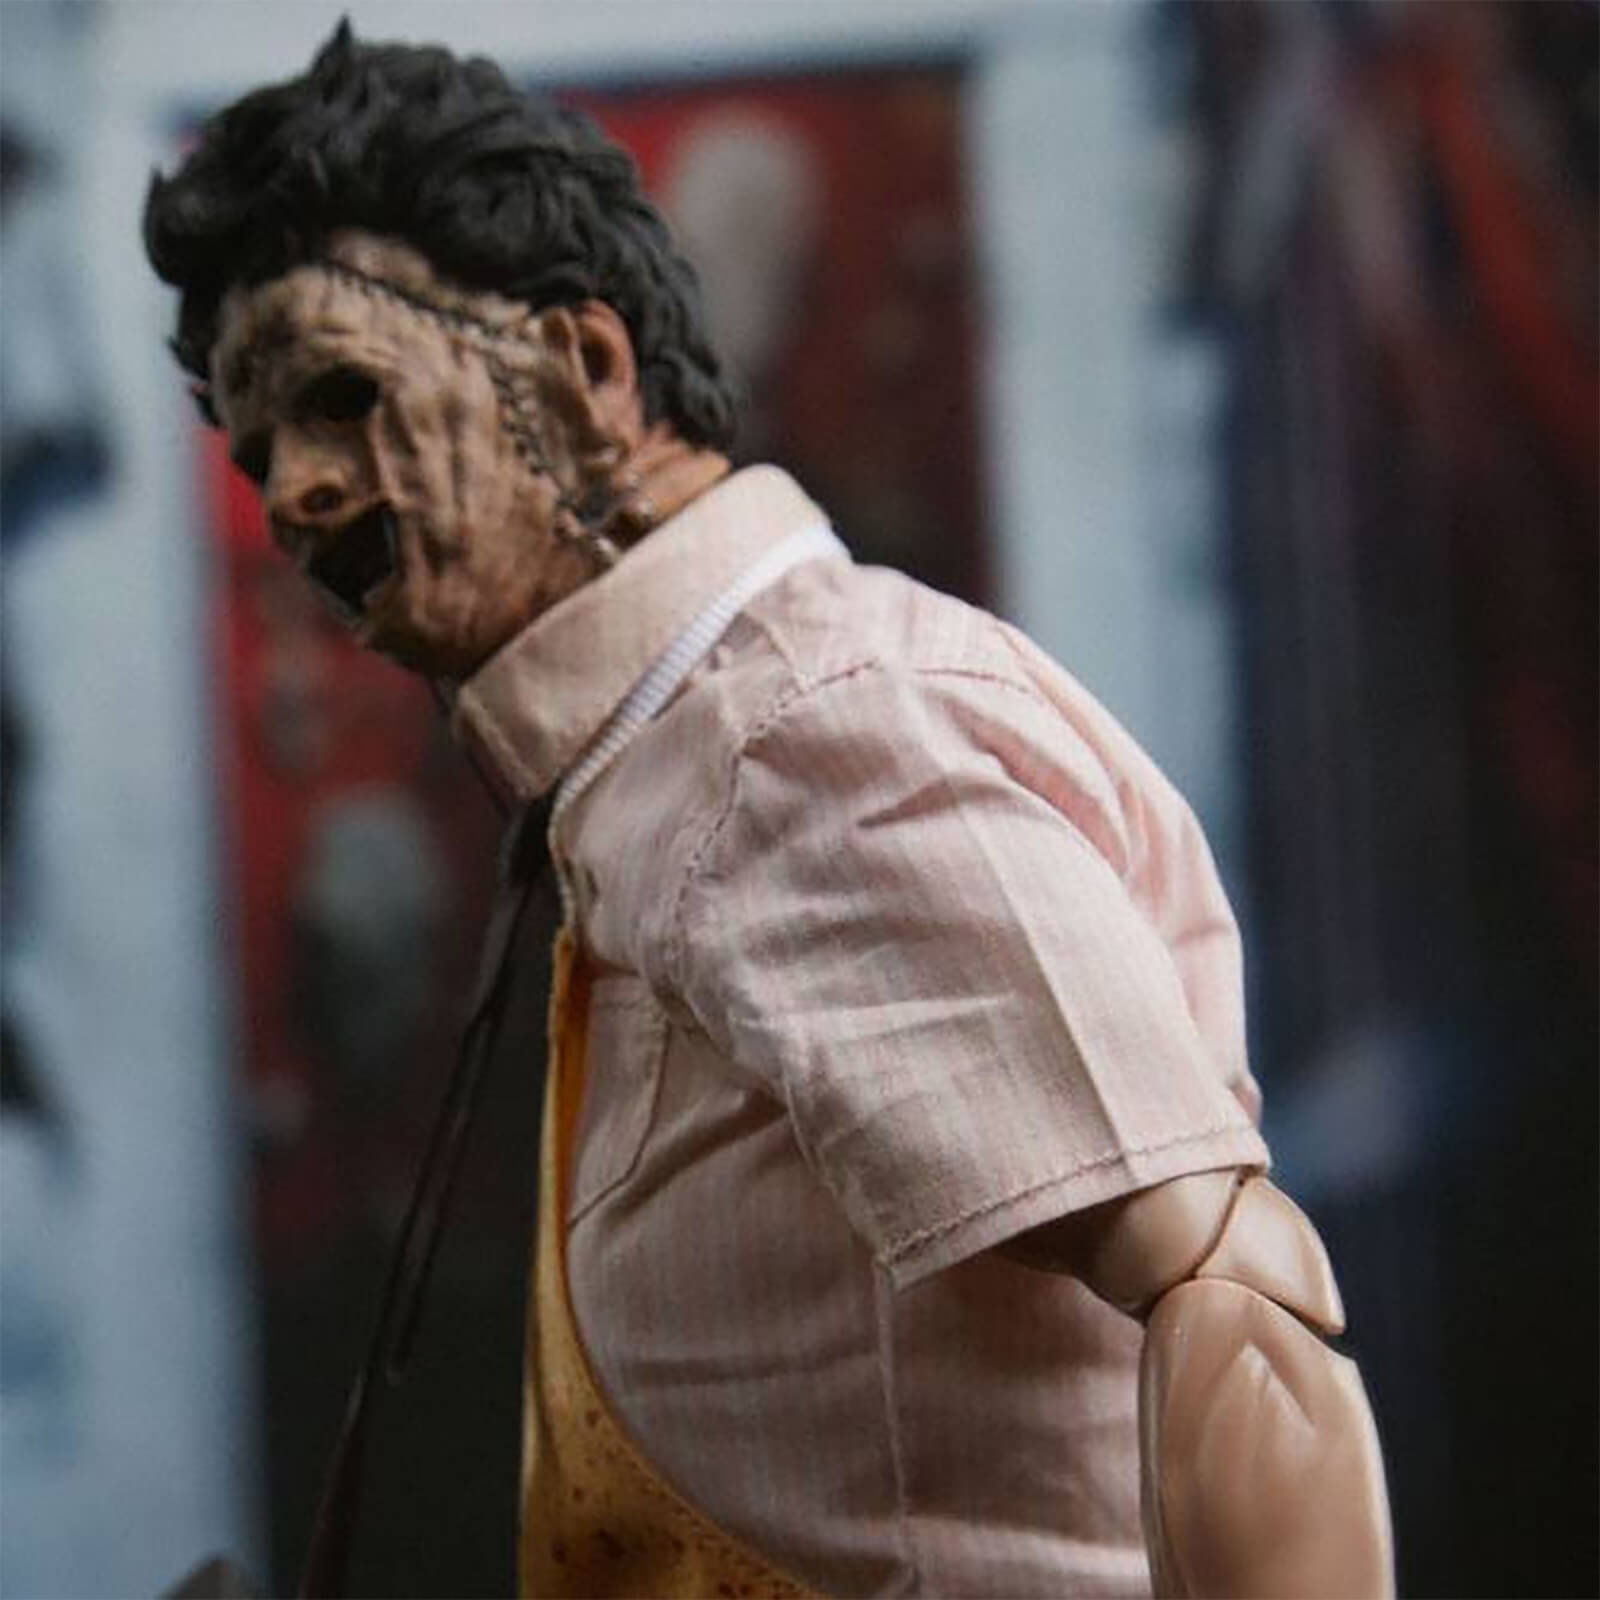 Sideshow Texas Chainsaw Massacre Action Figure 1/6 Leatherface (Killing Mask) 30cm Statue